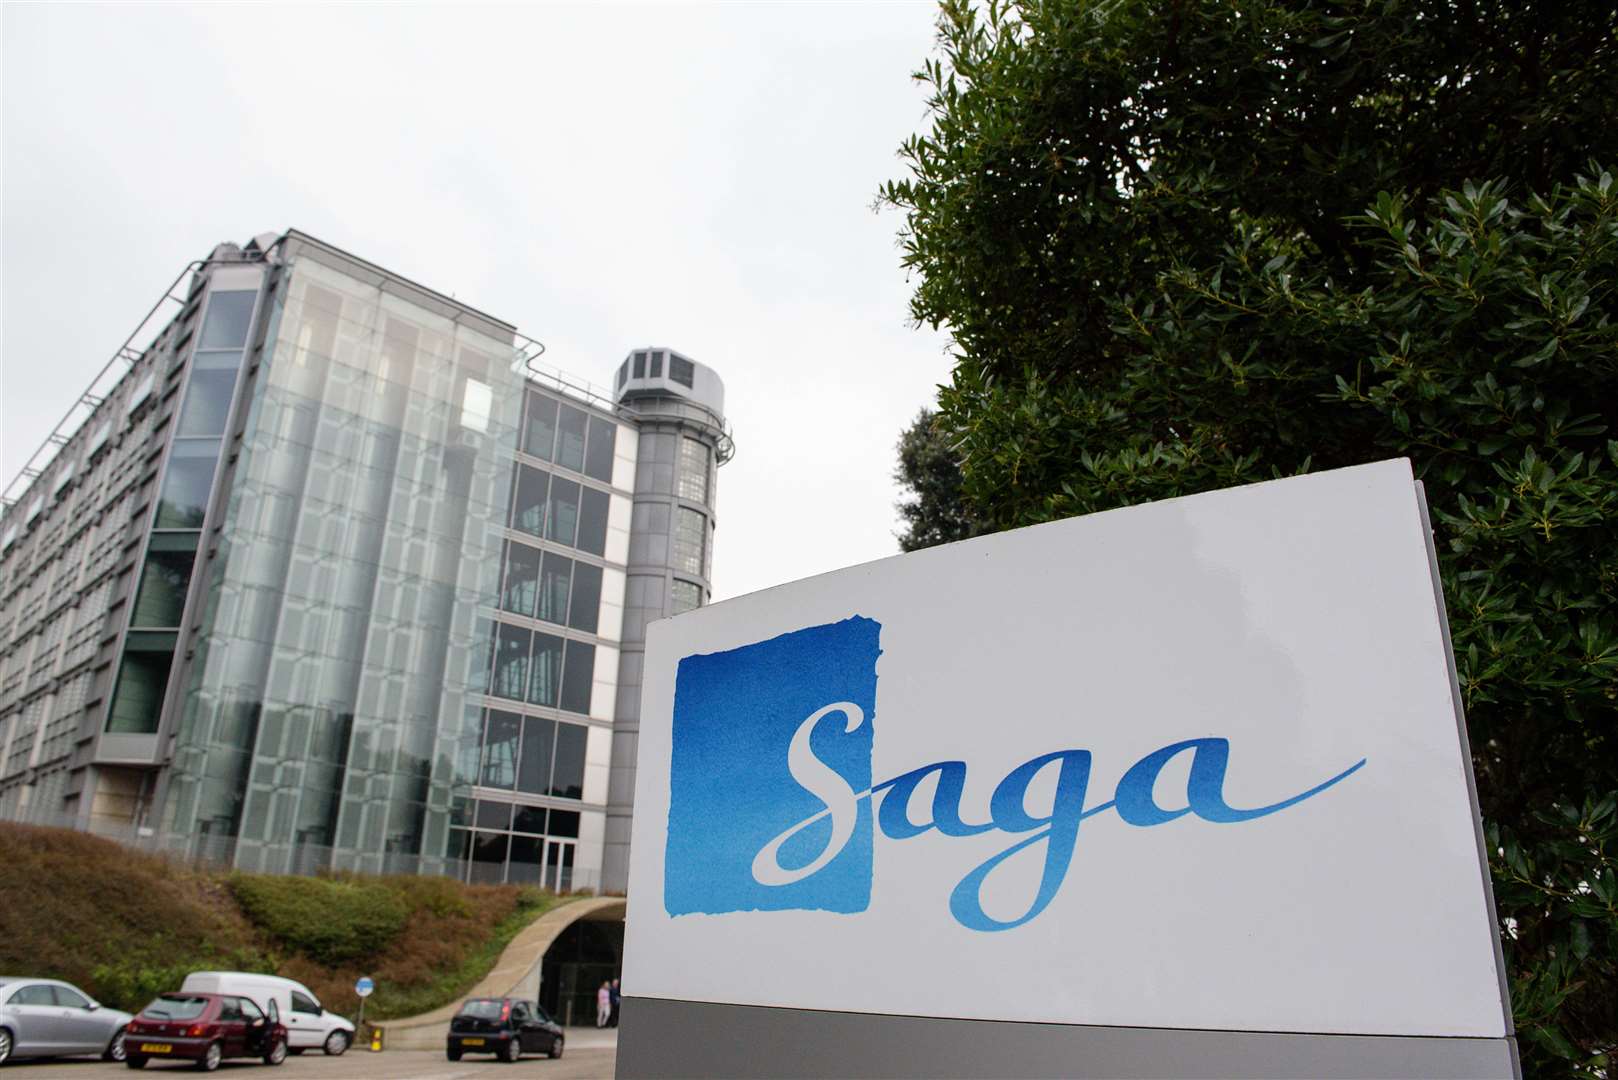 Saga's headquarters in Sandgate, Folkestone